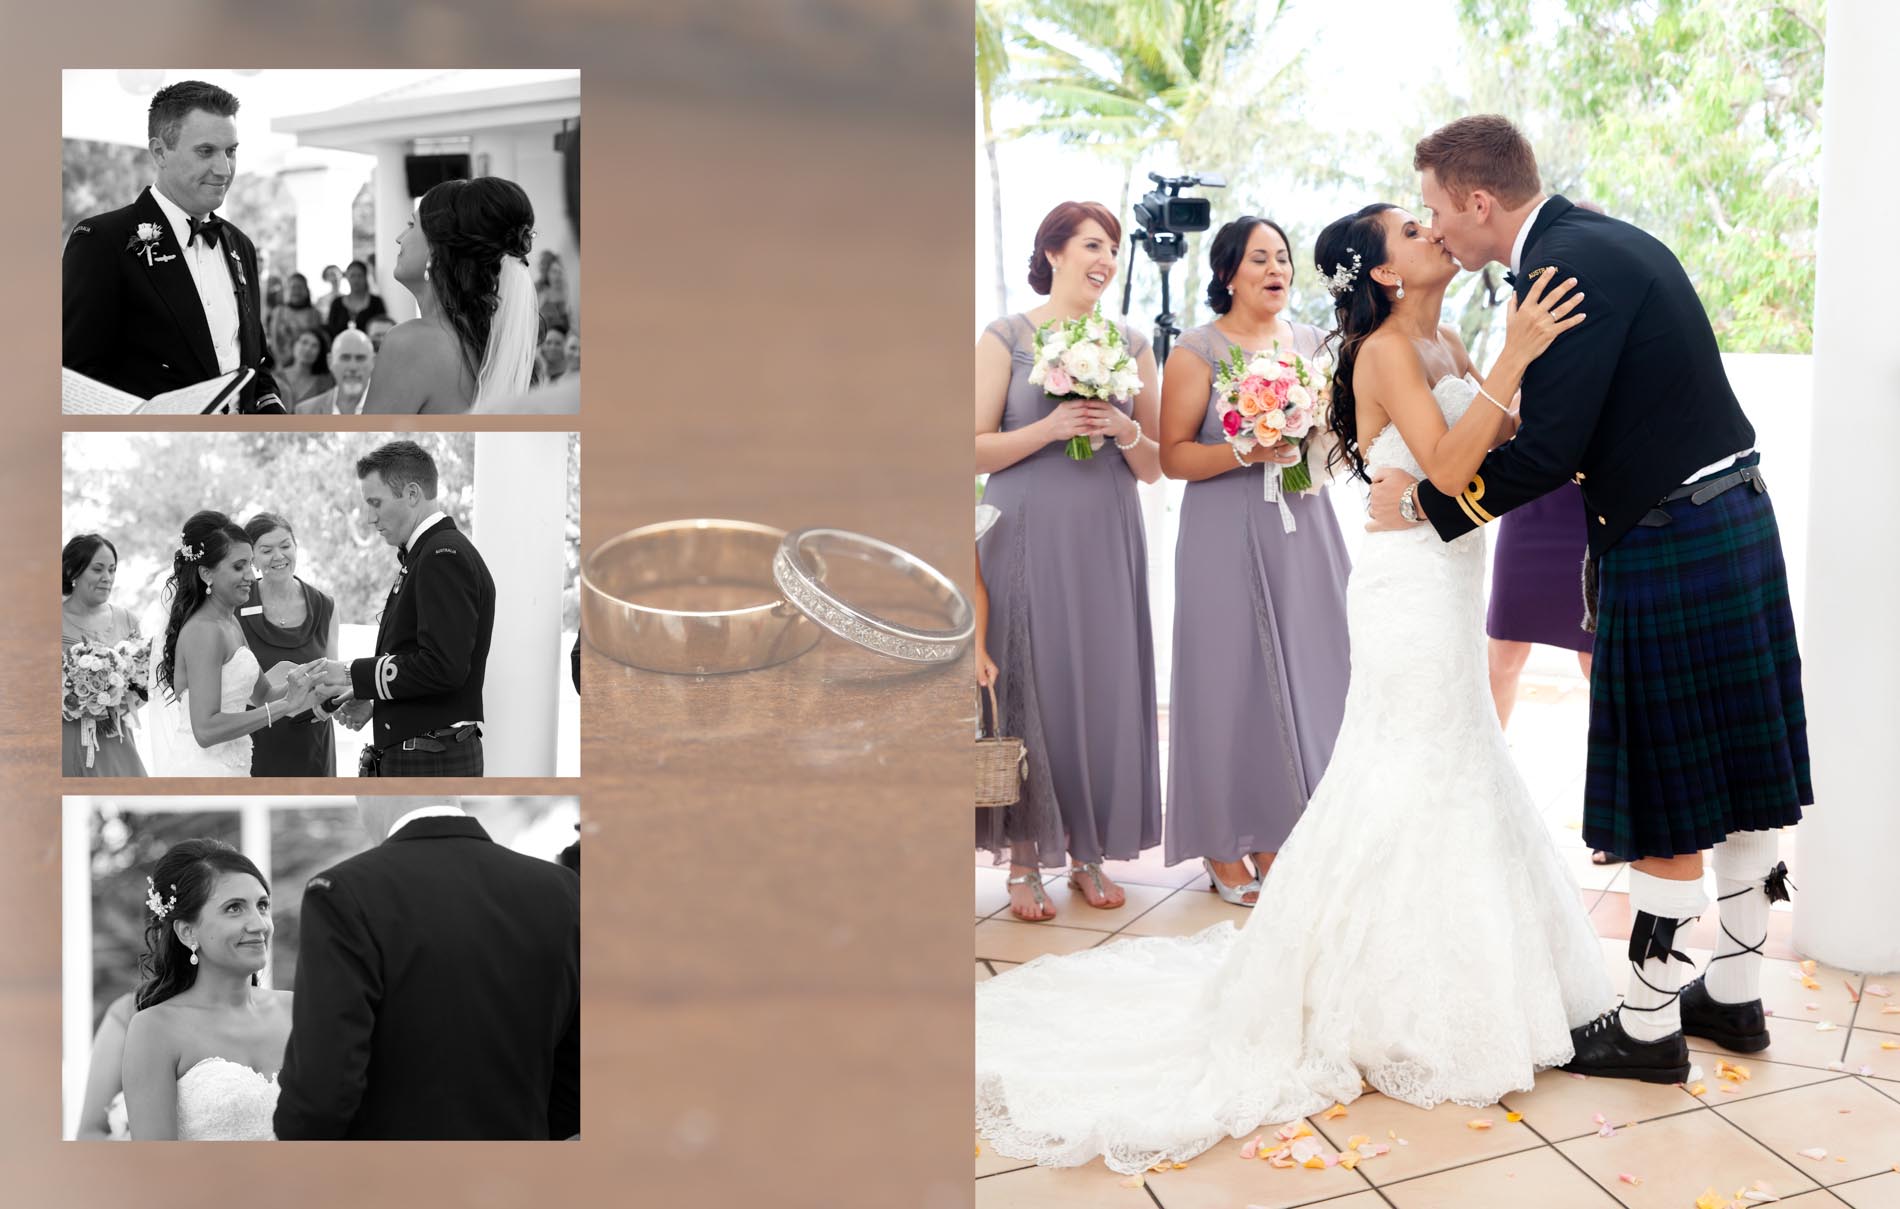 Palm Cove wedding Photographer captures beautiful wedding images at sarayi Palm Cove.